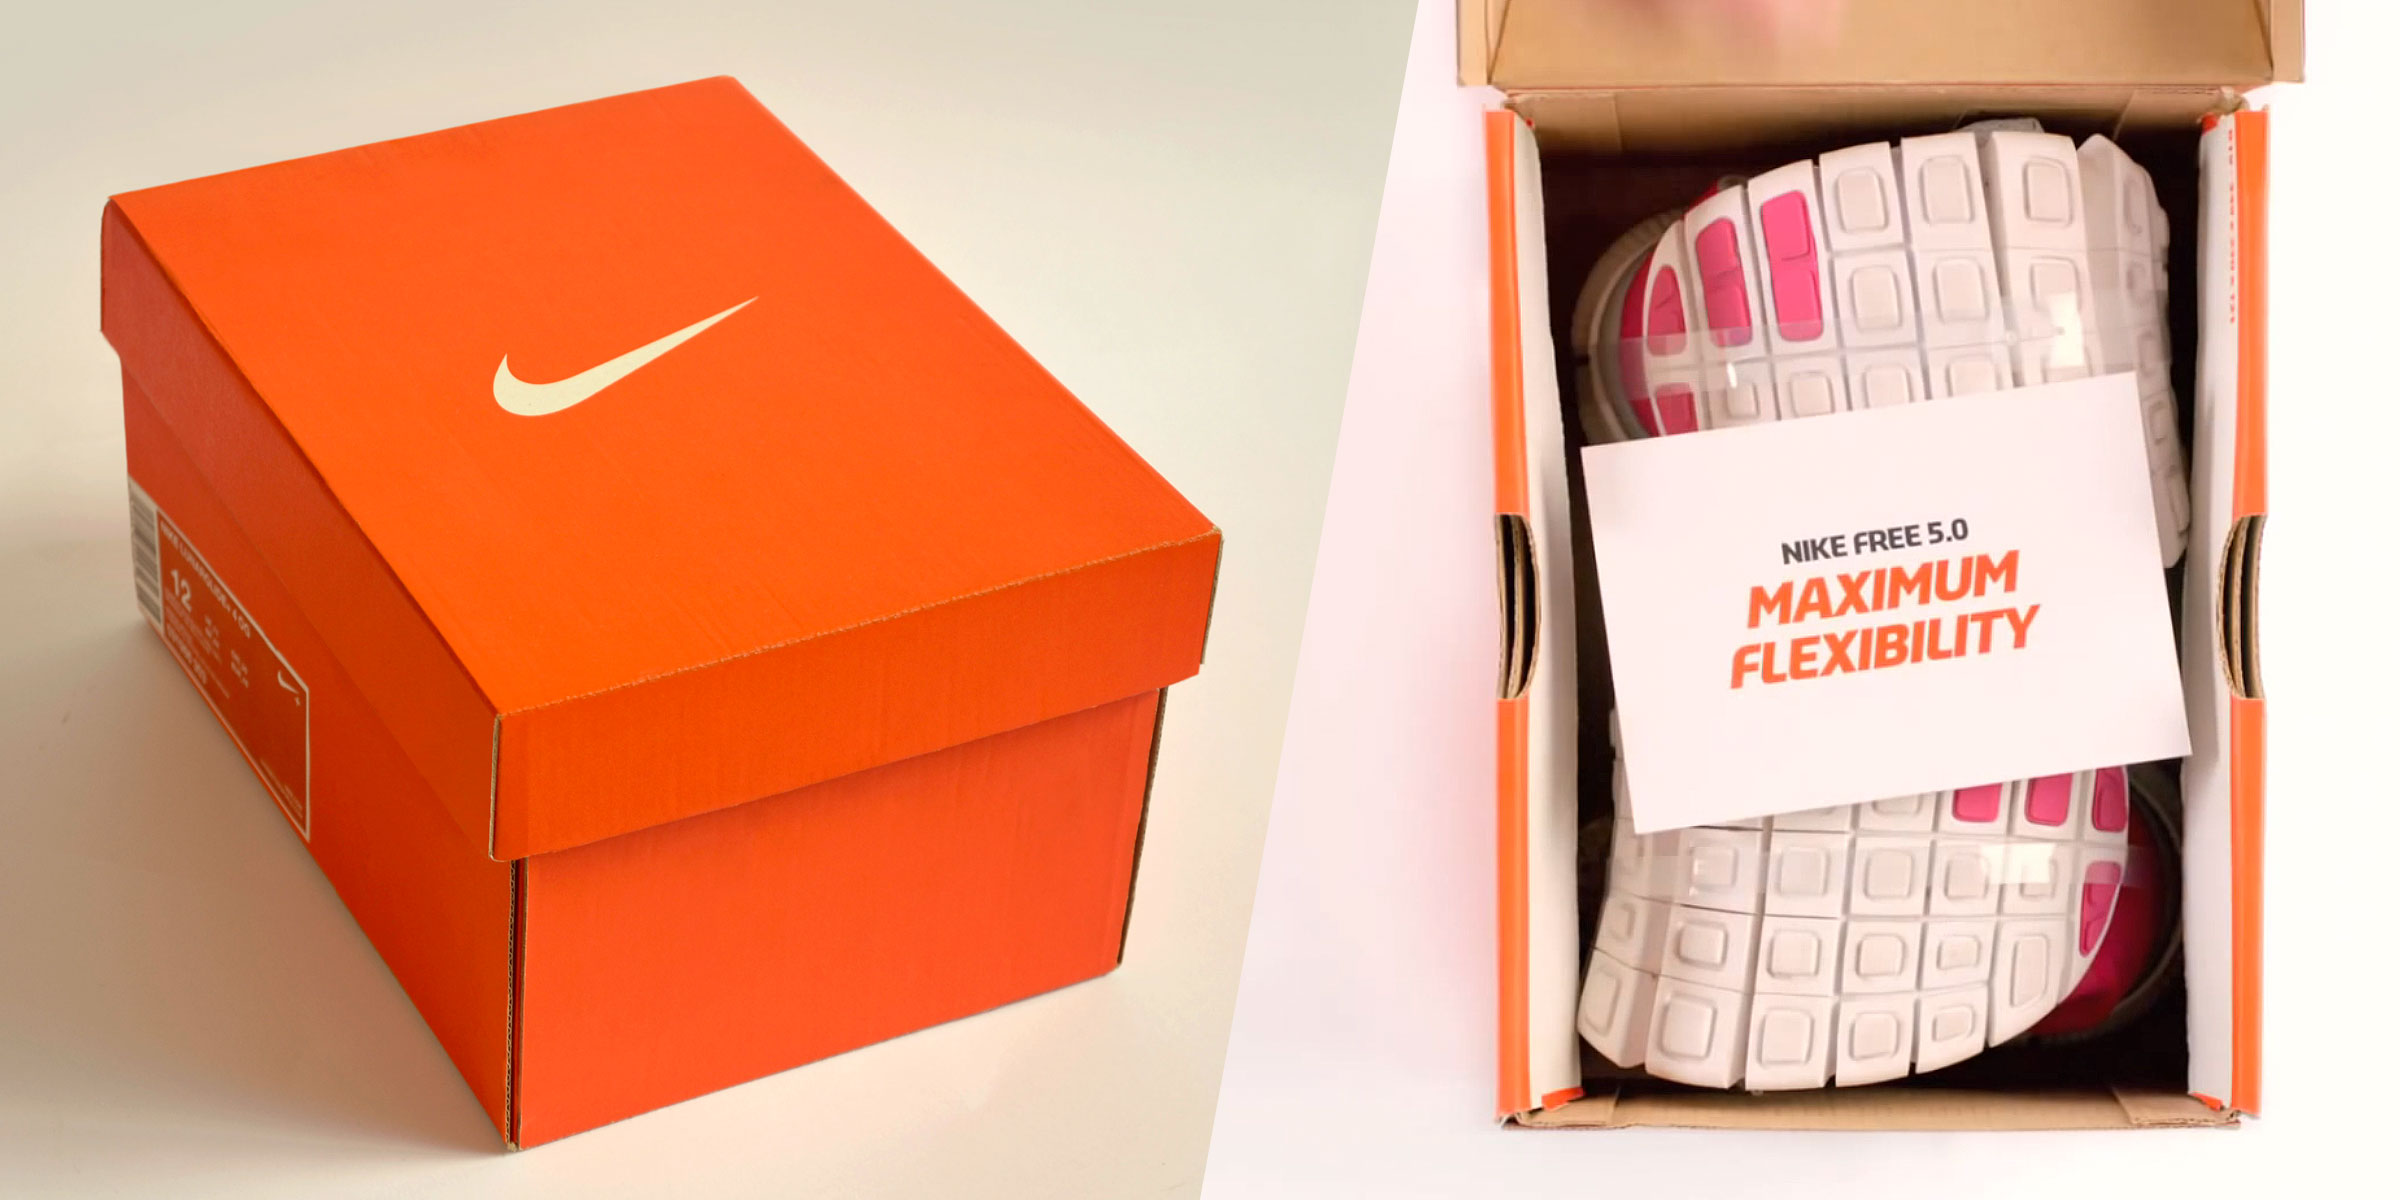 flor Huelga Considerar Nike Free Box: A Shoebox 1/3 the Size of the Original | Dieline - Design,  Branding & Packaging Inspiration